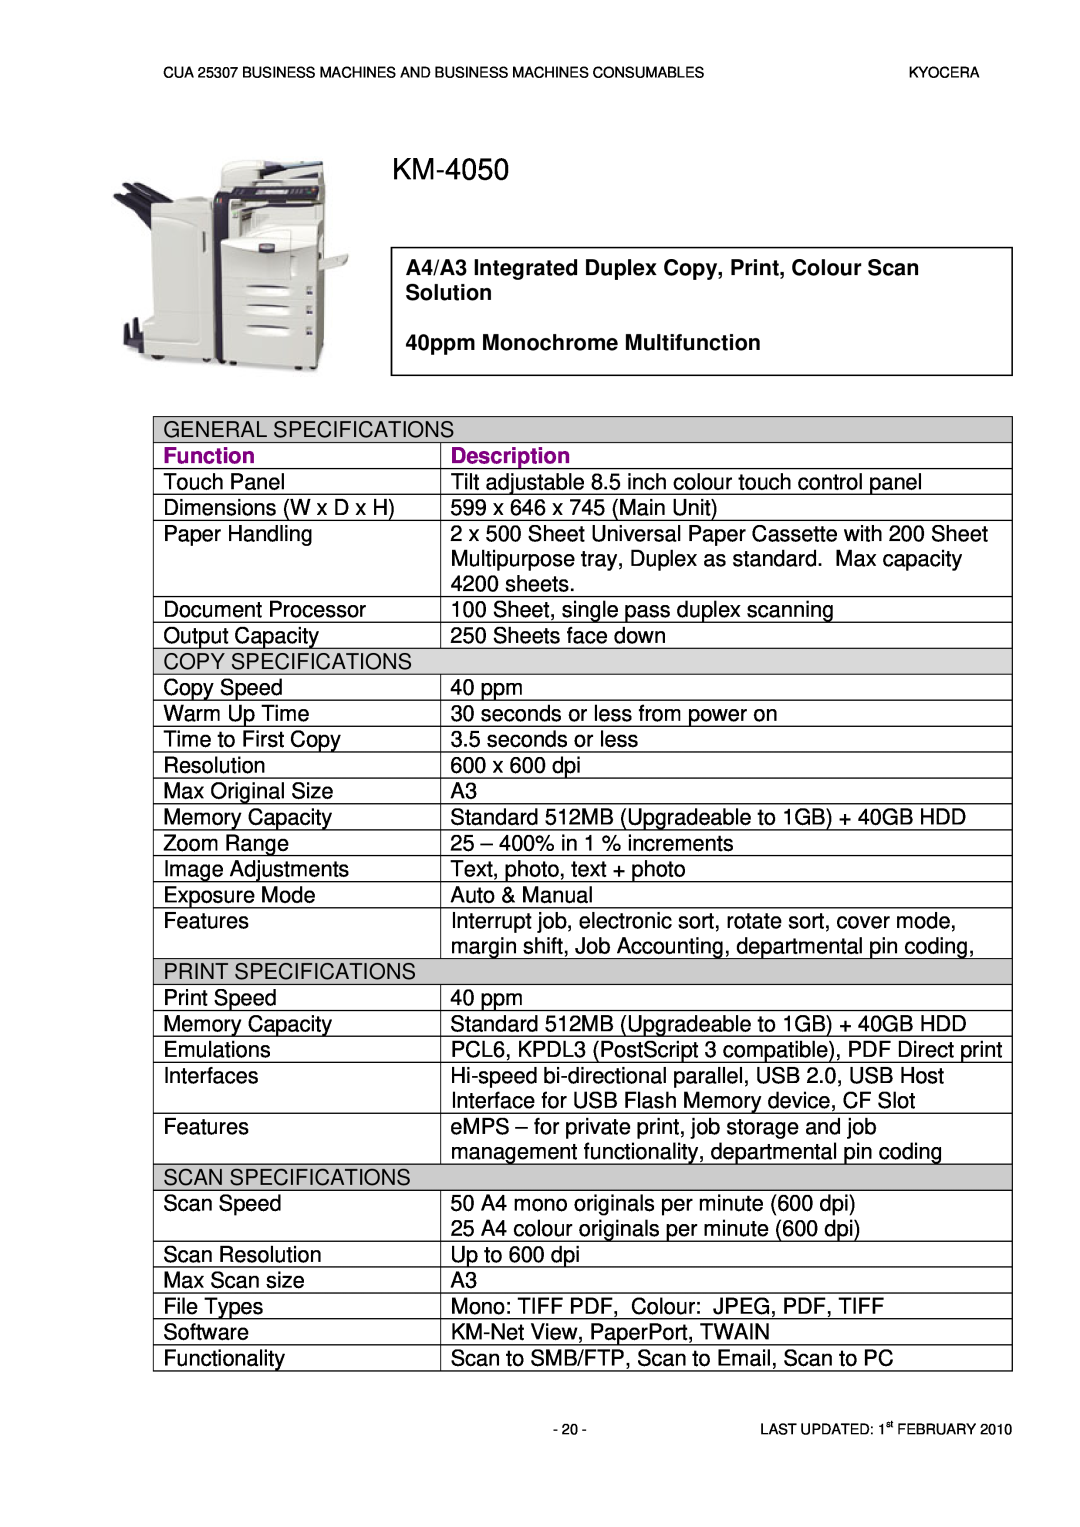 Kyocera CUA 25307 manual KM-4050, A4/A3 Integrated Duplex Copy, Print, Colour Scan, Solution 40ppm Monochrome Multifunction 